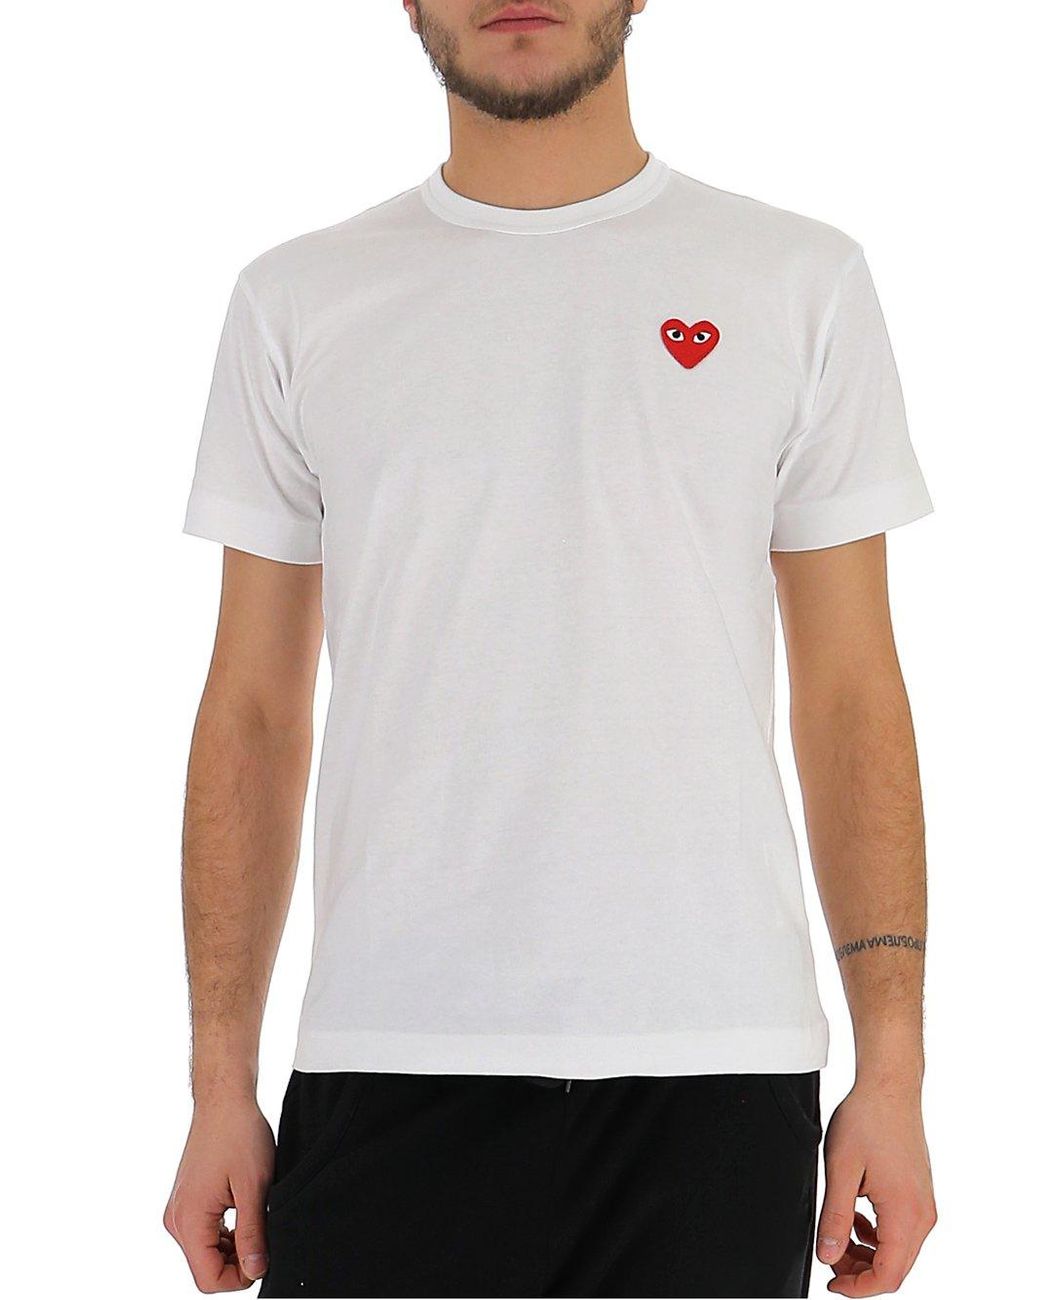 COMME DES GARÇONS PLAY Basic Logo T-shirt in White for Men - Save 11%